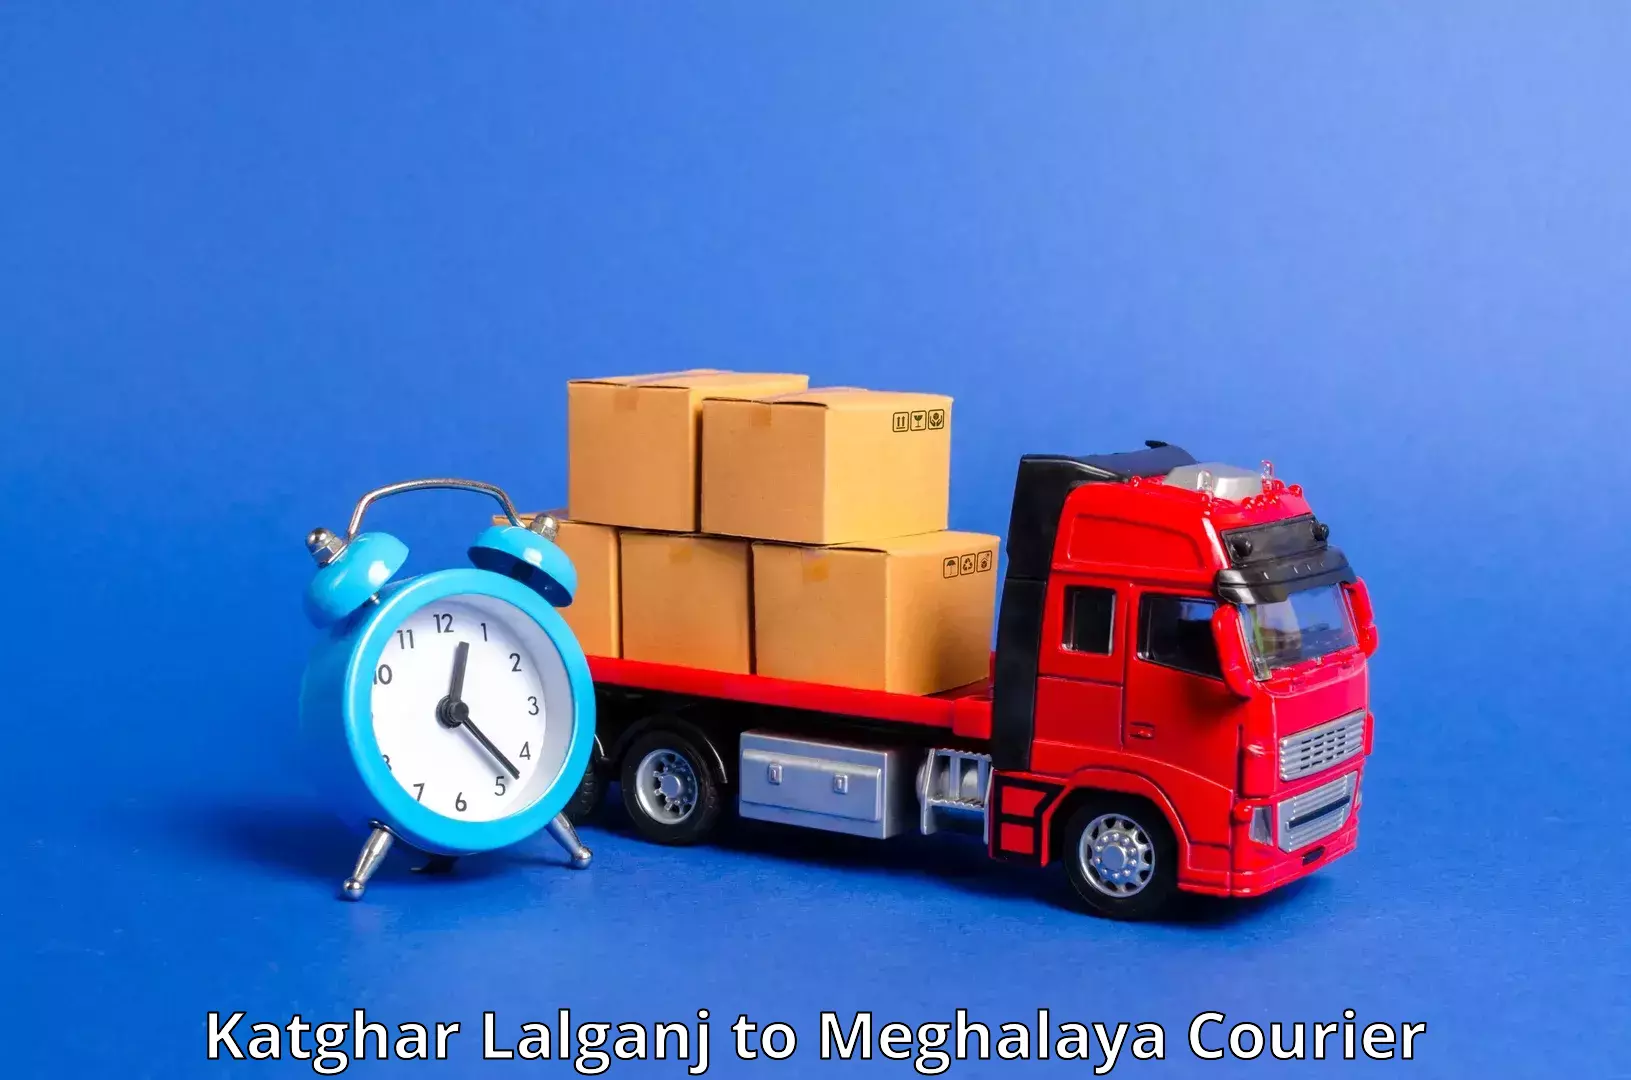 Professional courier services Katghar Lalganj to Shillong